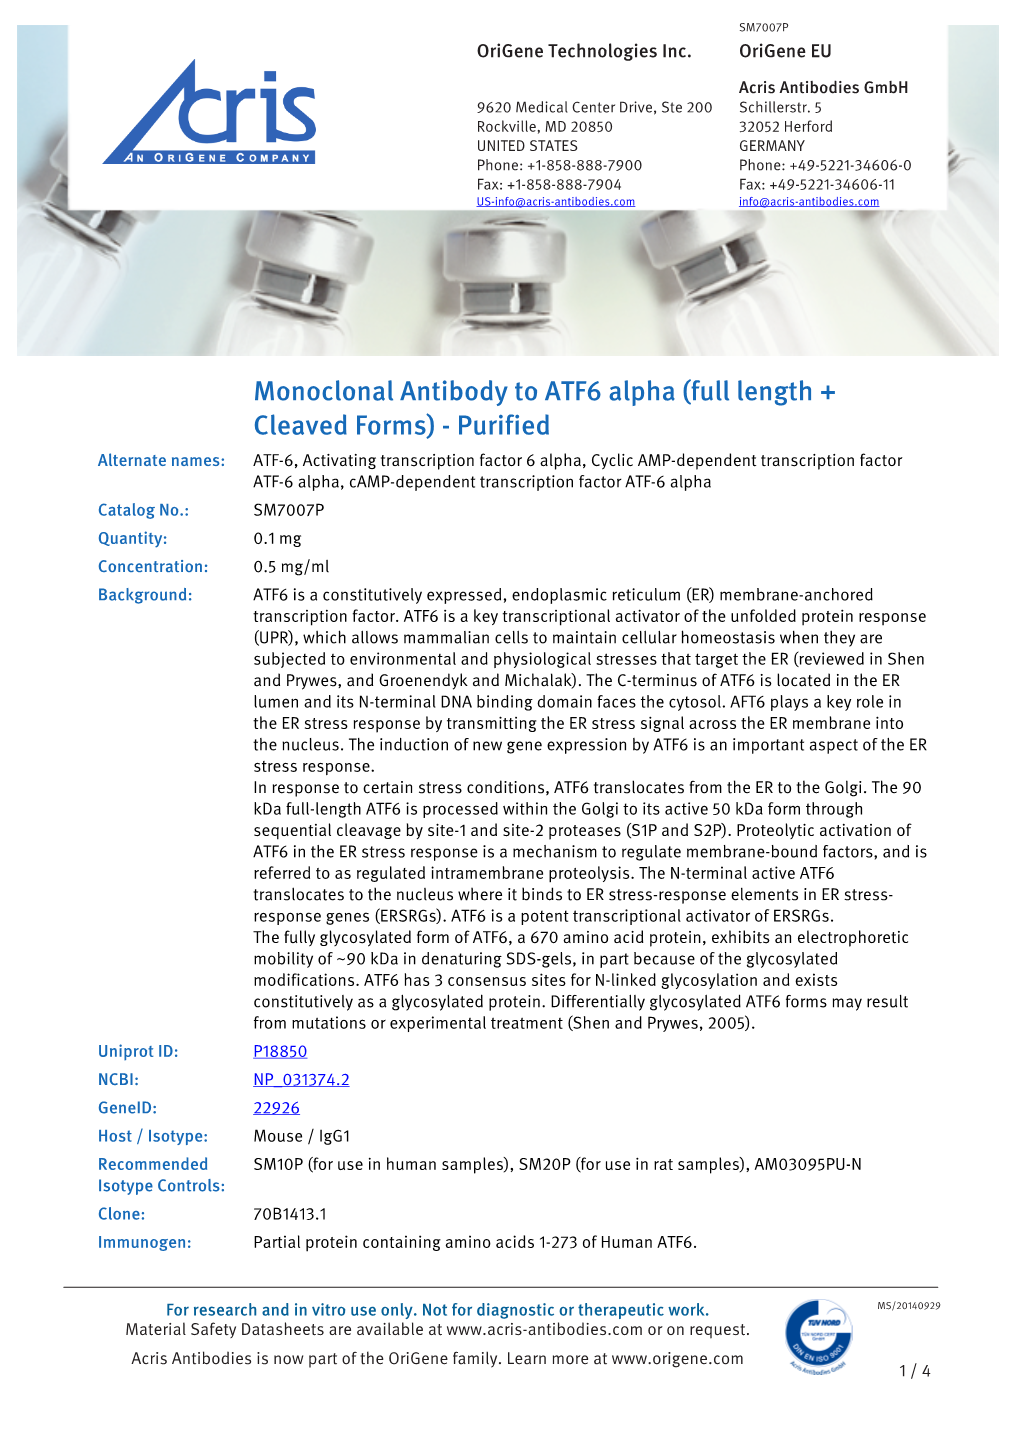 Monoclonal Antibody to ATF6 Alpha